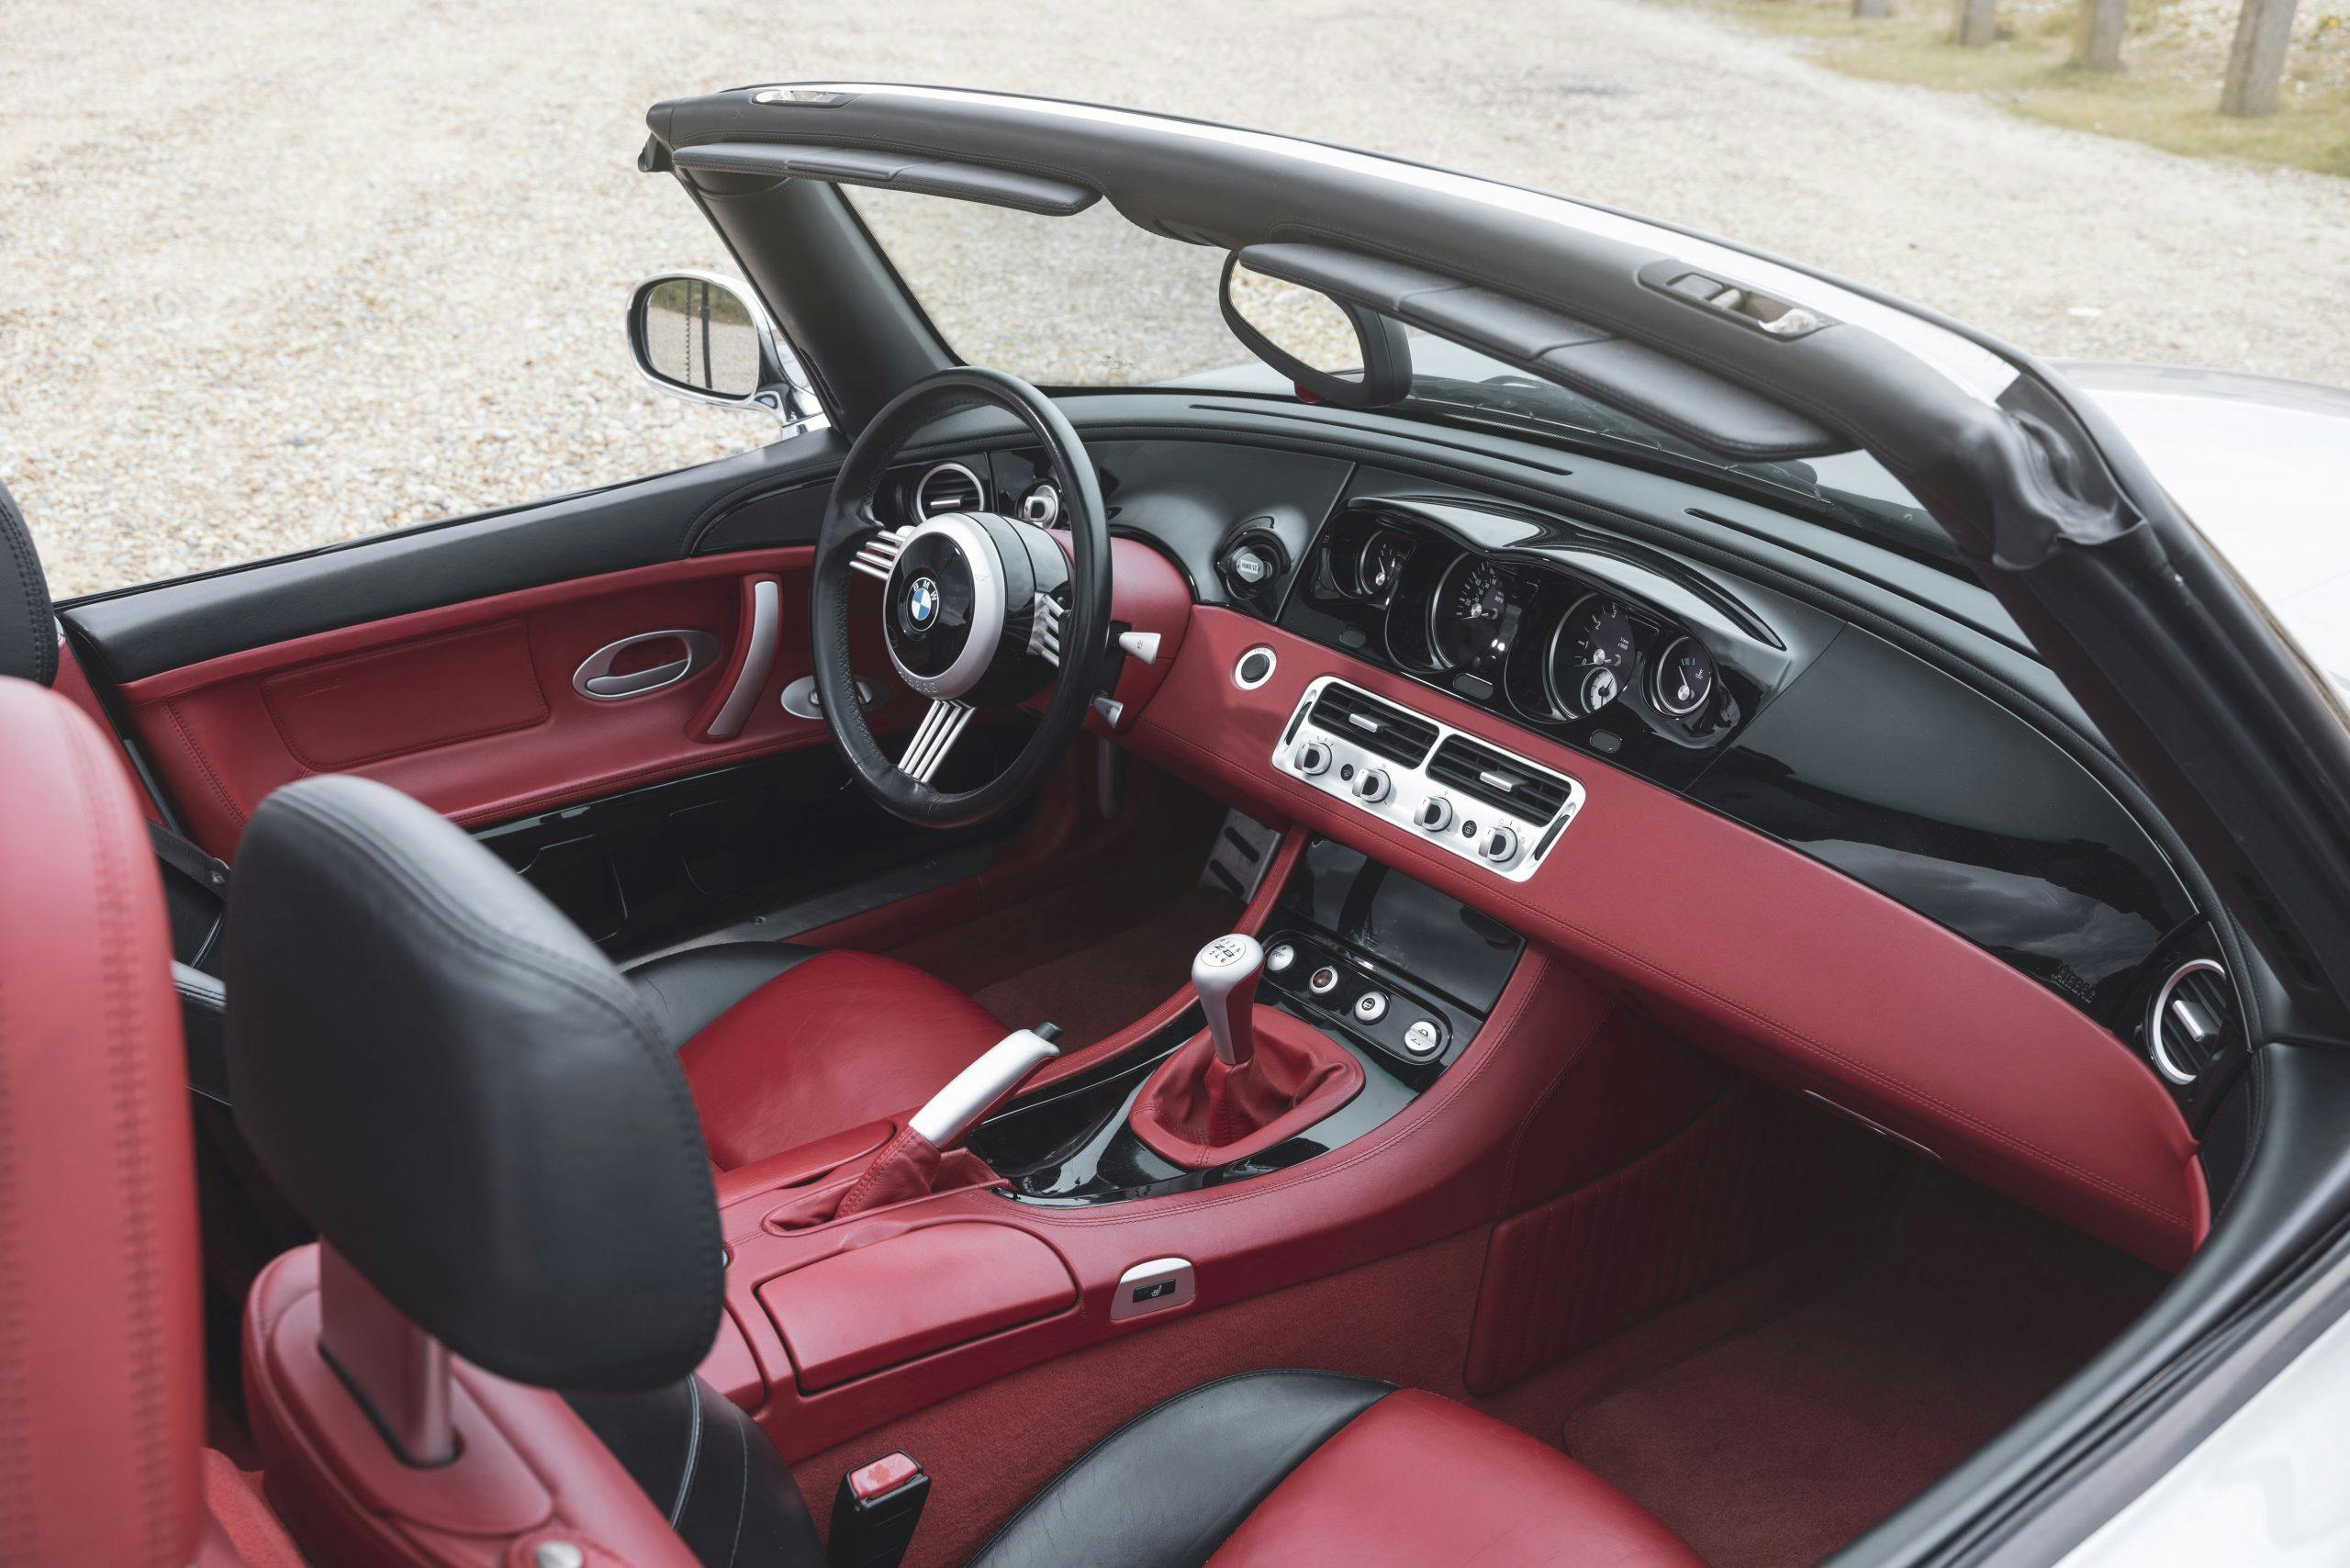 2000 BMW Z8 interior angle full